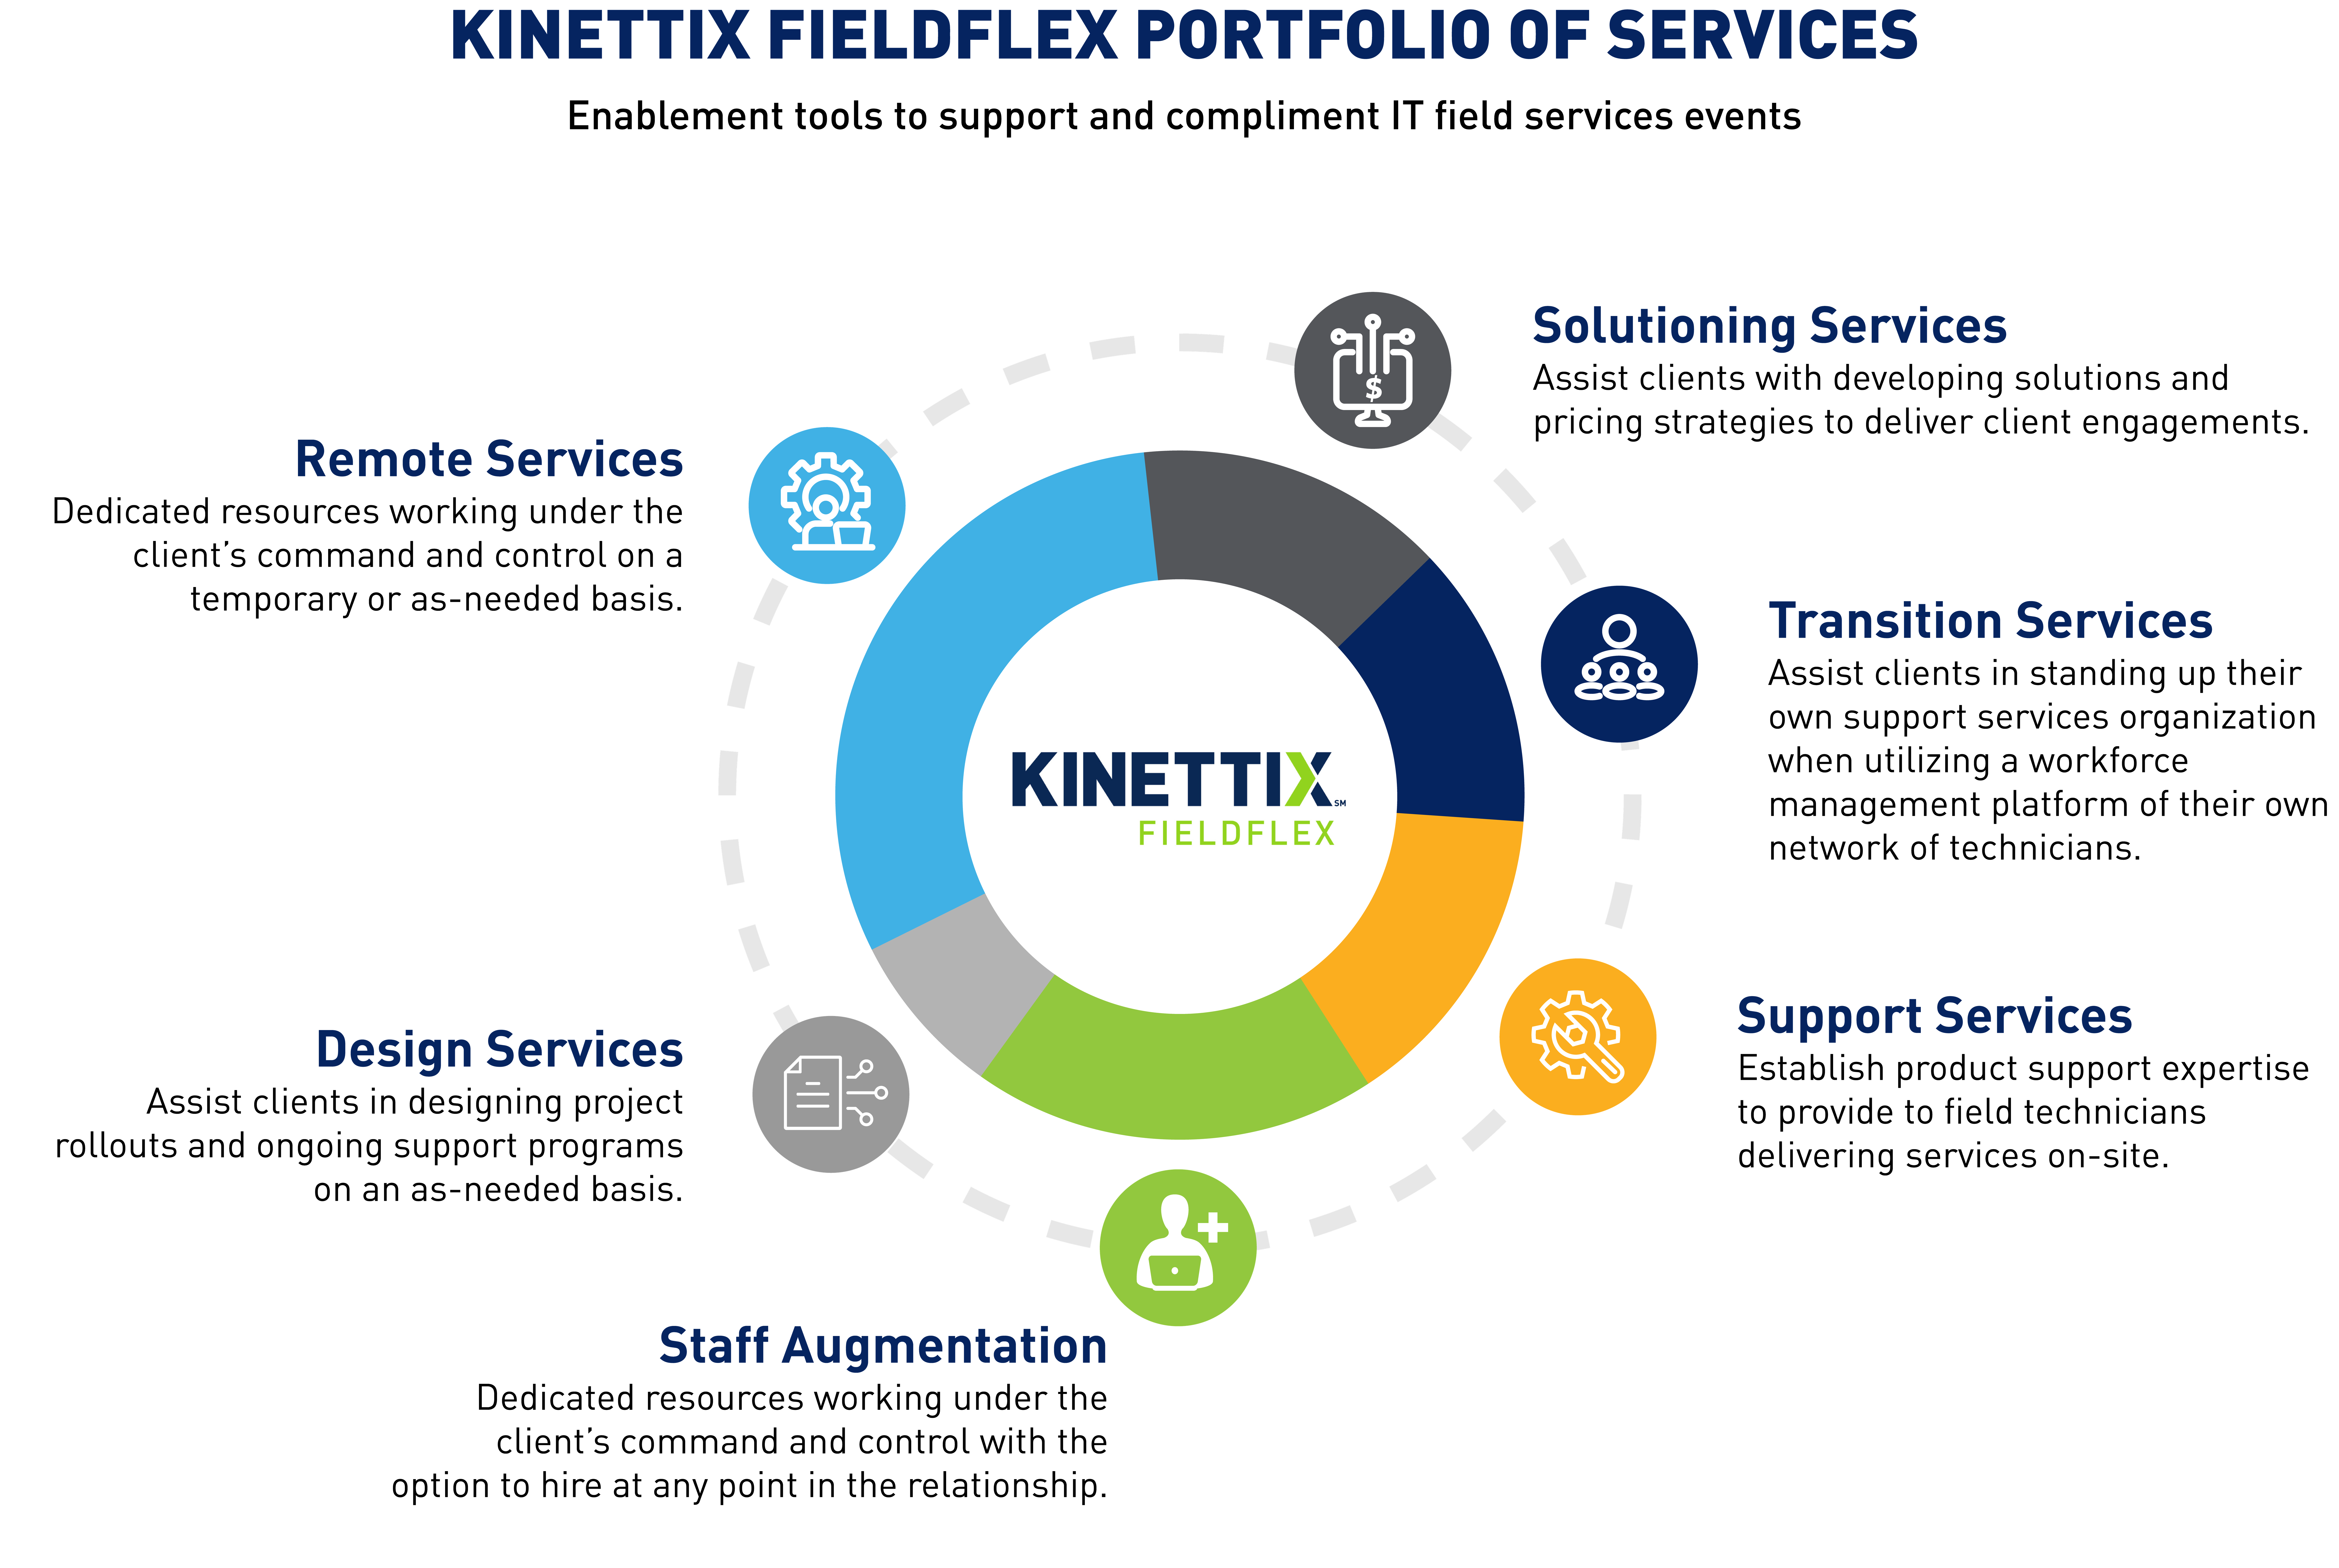 KNTX_FieldFlex-Portfolio-of-Services-Circular-Diagram_FIG6-RGBx1920